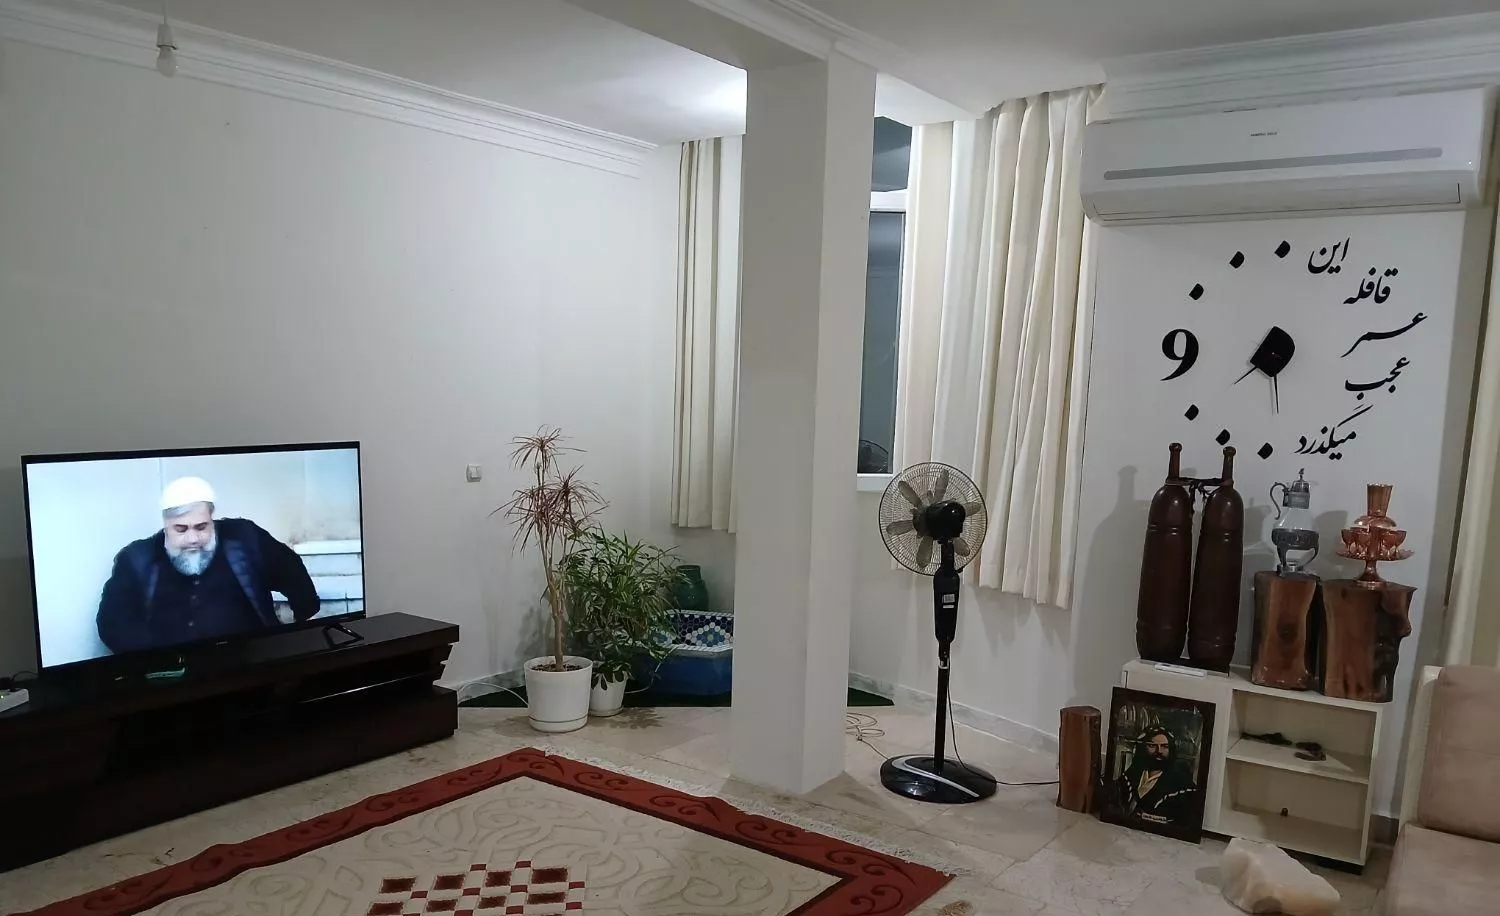 آپارتمان علیمحمدی رهن کامل